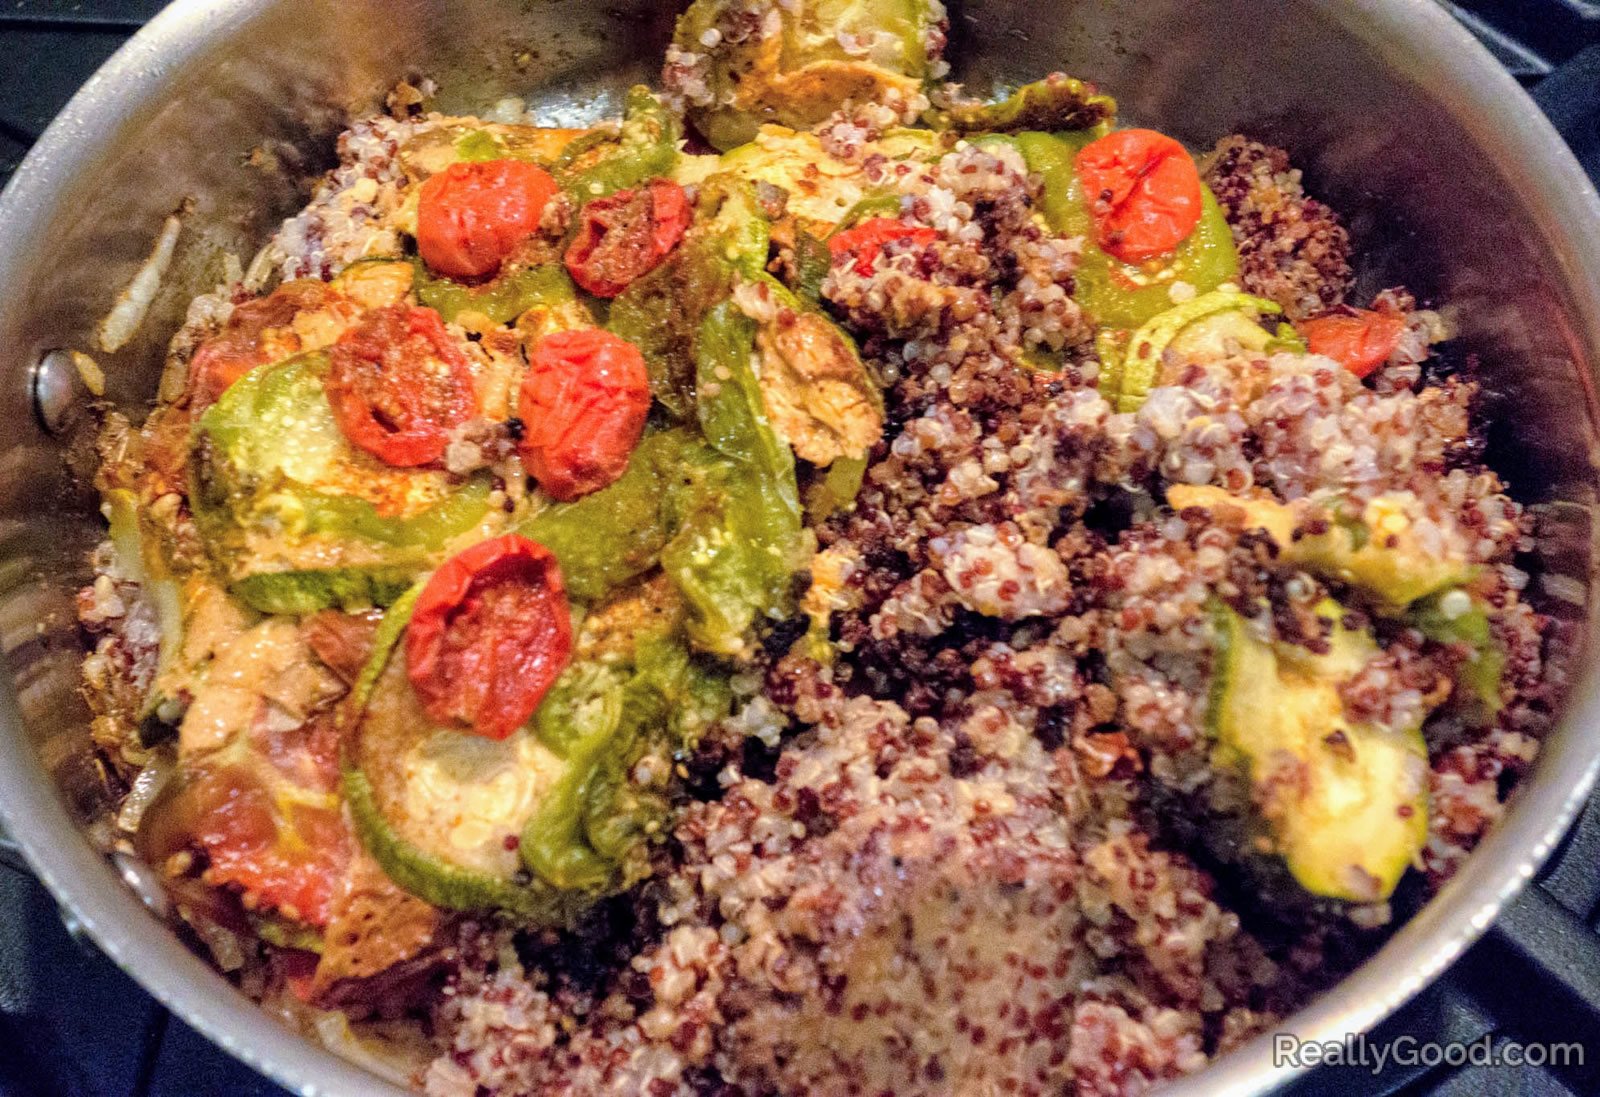 Homemade quinoa and vegetables